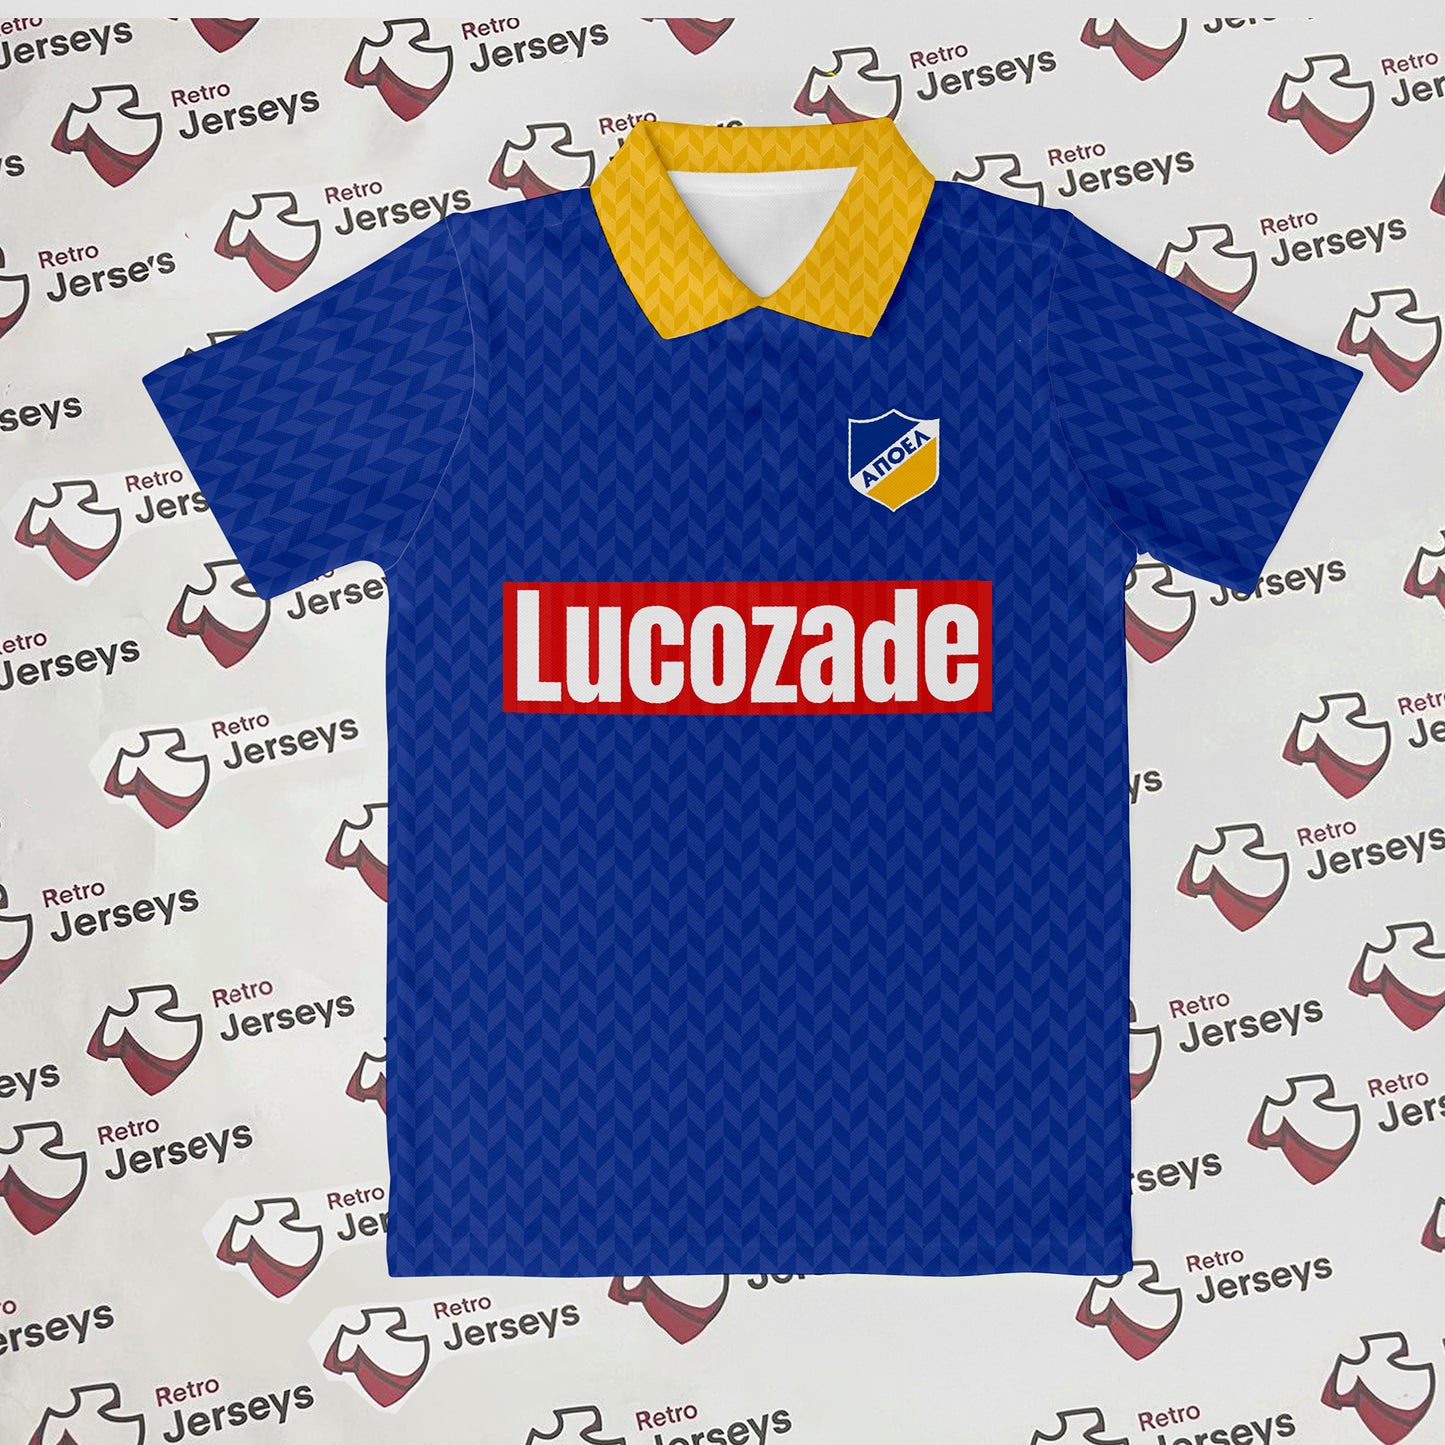 APOEL Nicosia Shirt 1989-1990 Home - Retro Jersey, φανέλα αποέλ